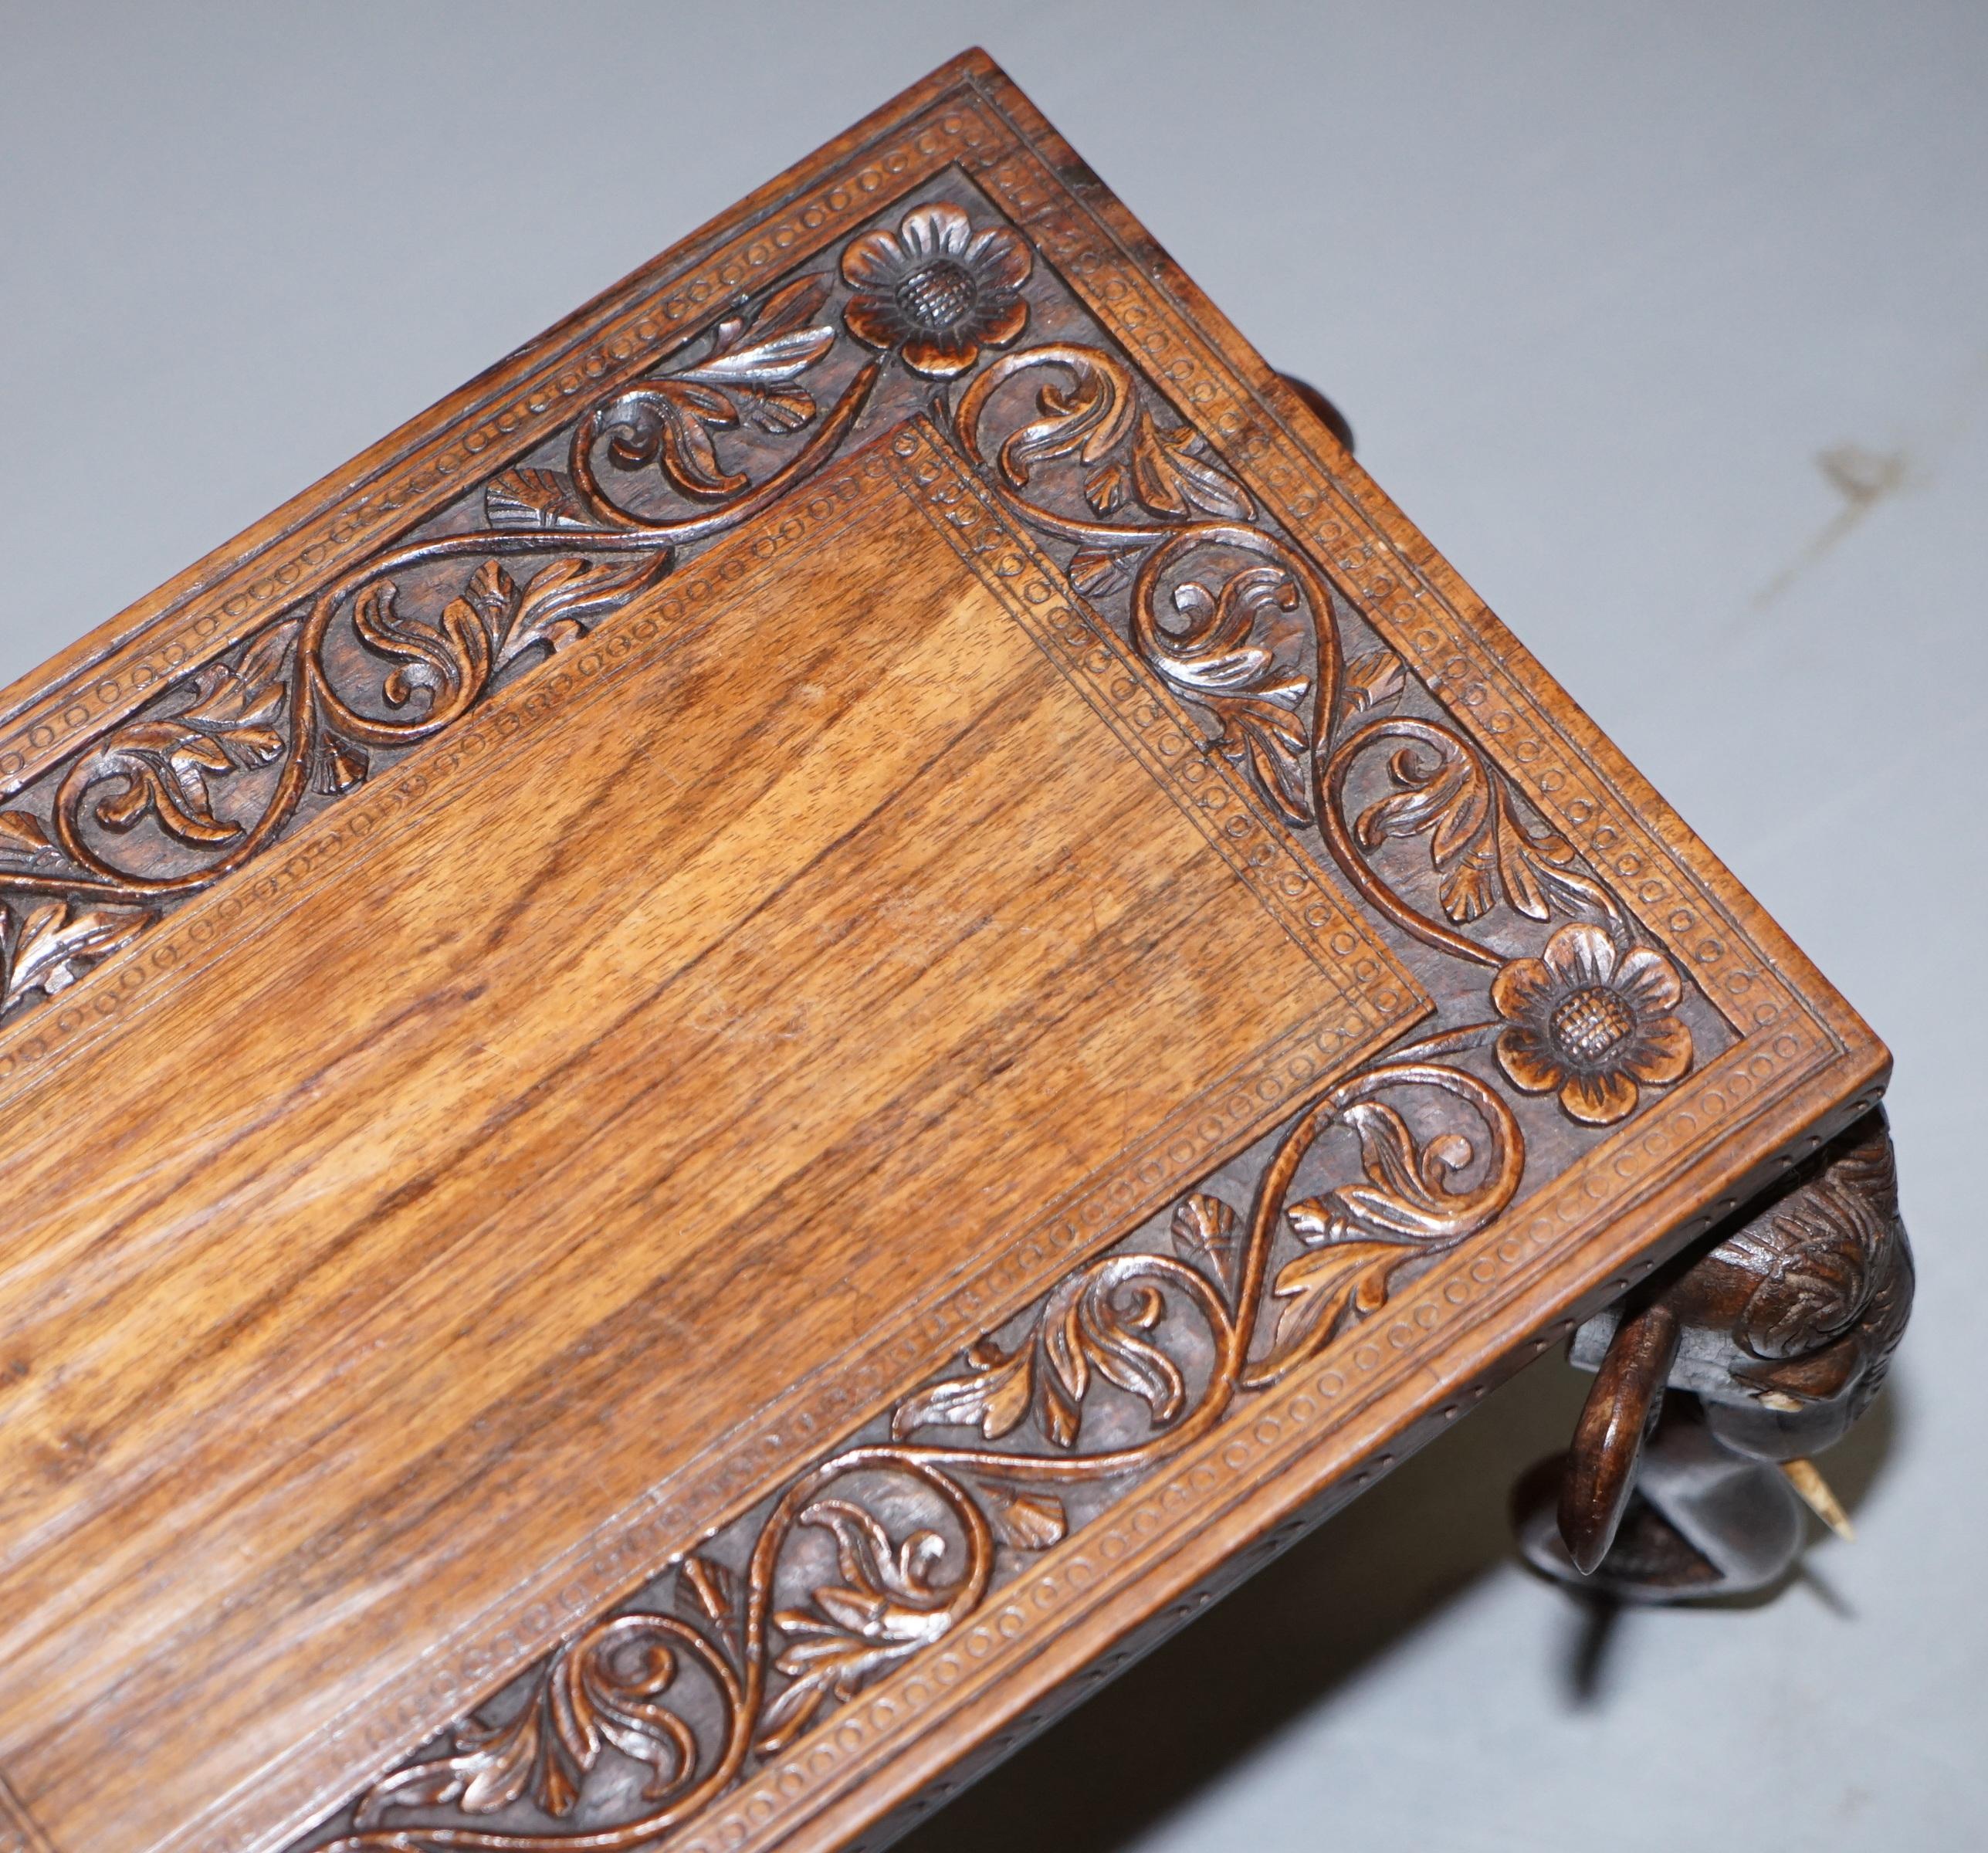 Stunning Small circa 1900 Anglo-Indian Elephant Hand Carved Hardwood Side Table 1